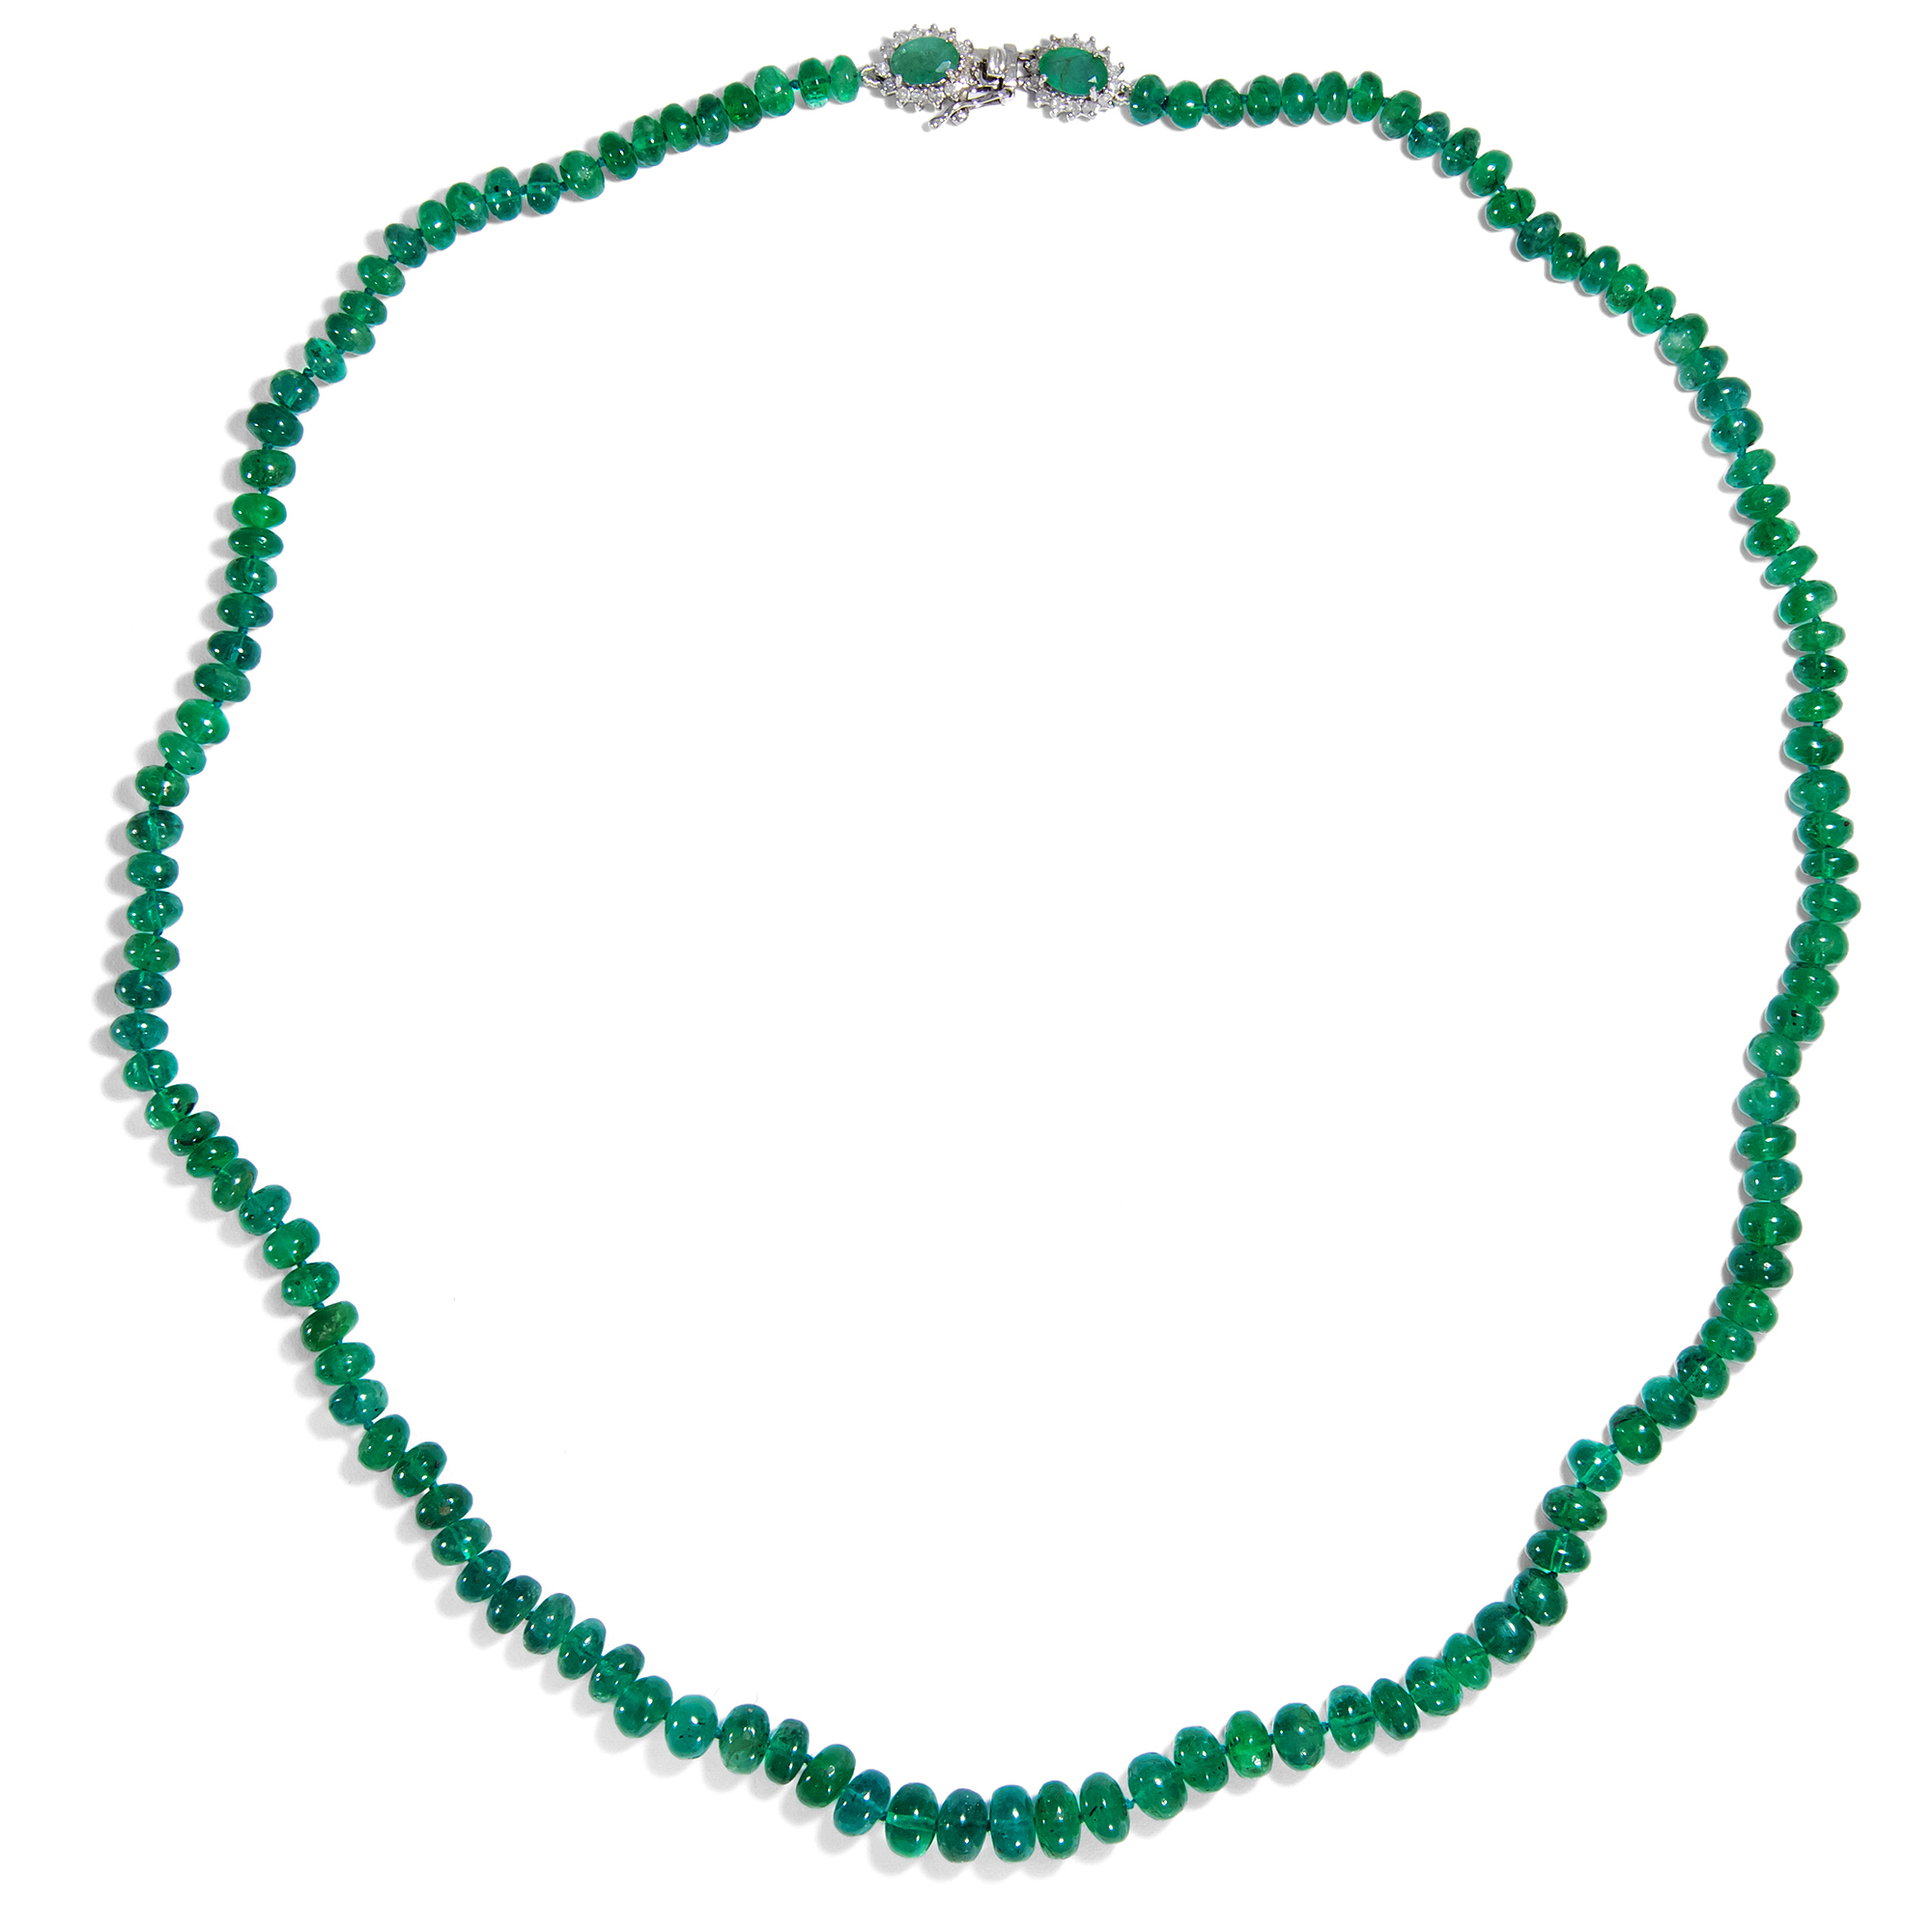 Splendid Vintage Emerald Necklace With Diamond Clasp, Around 1980